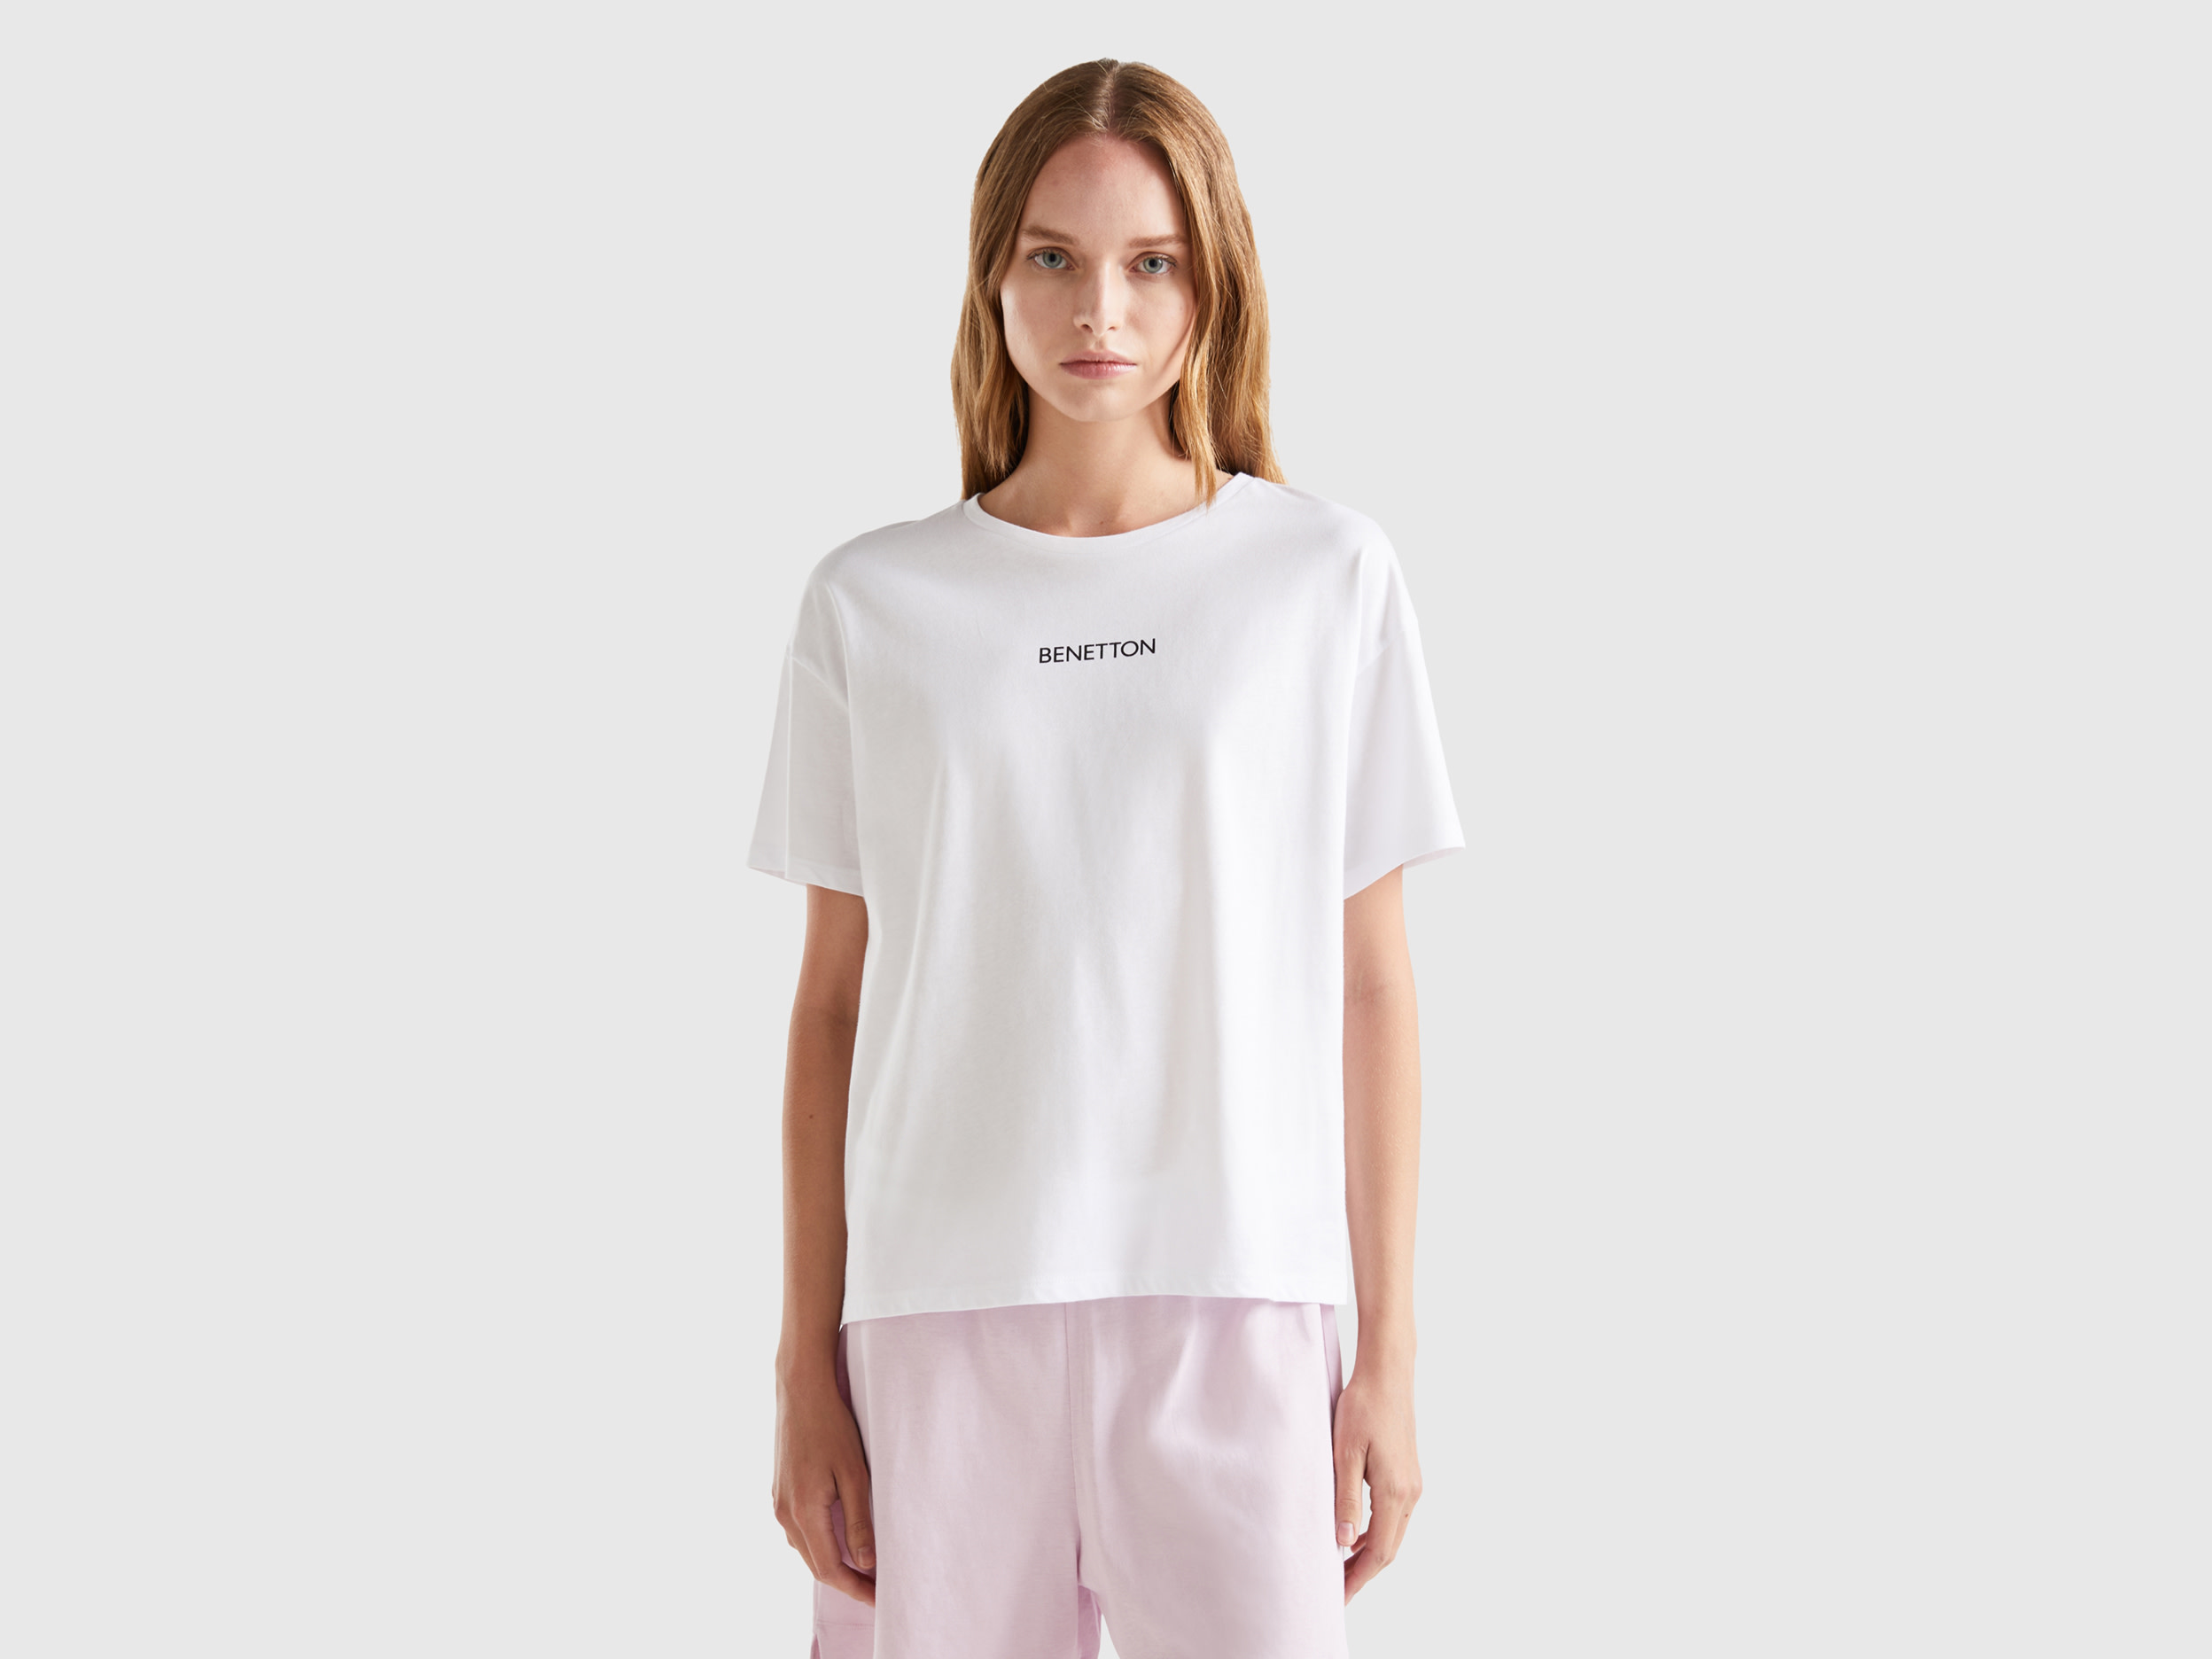 Benetton, 100% Cotton T-shirt, size M, White, Women